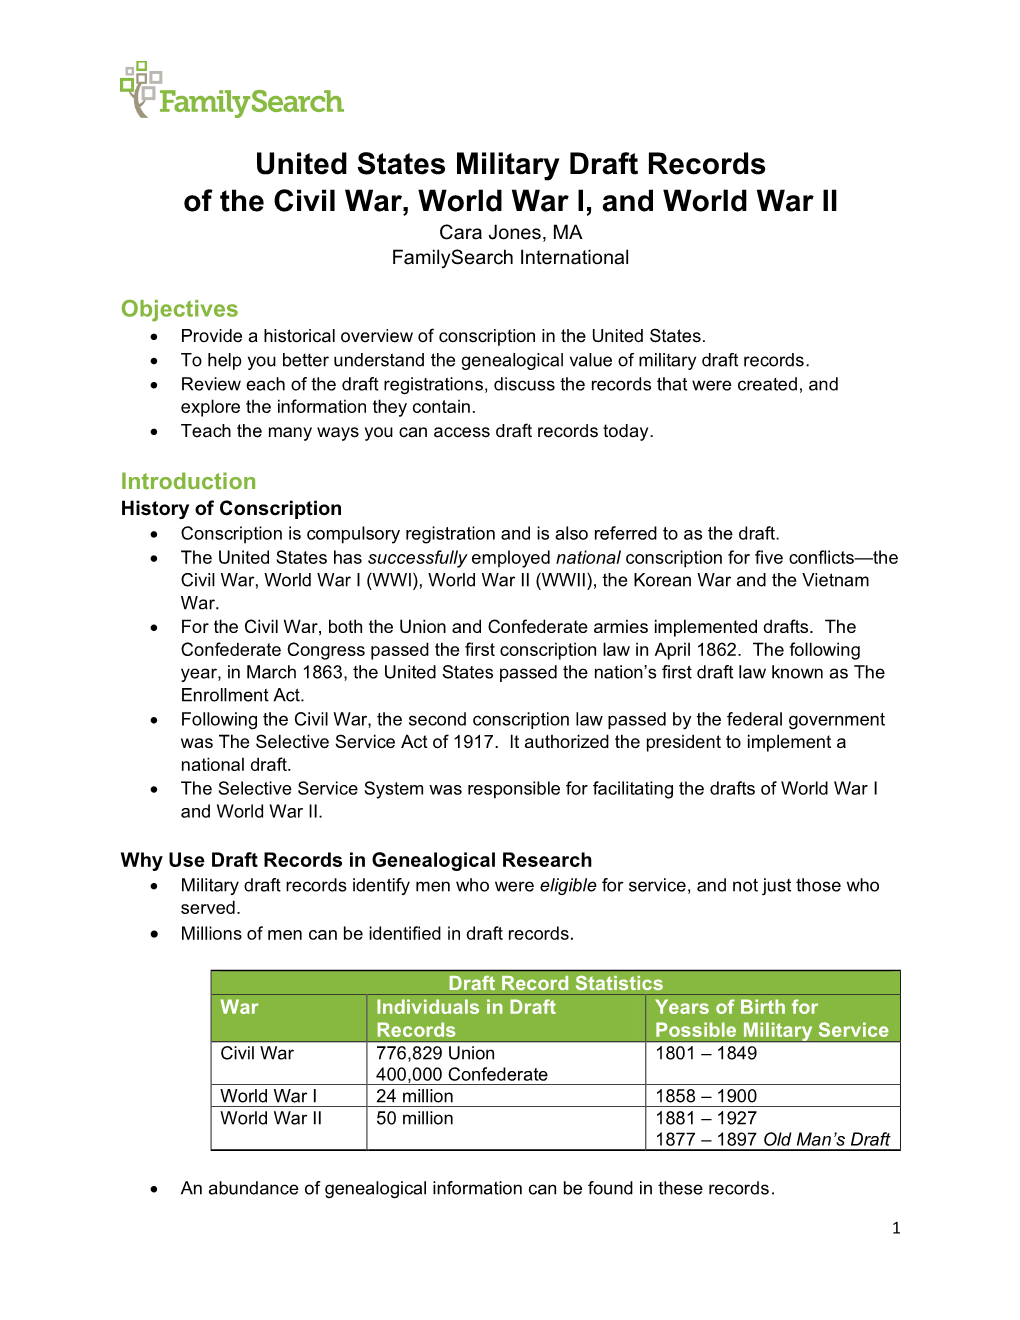 United States Military Draft Records of the Civil War, World War I, and World War II Cara Jones, MA Familysearch International